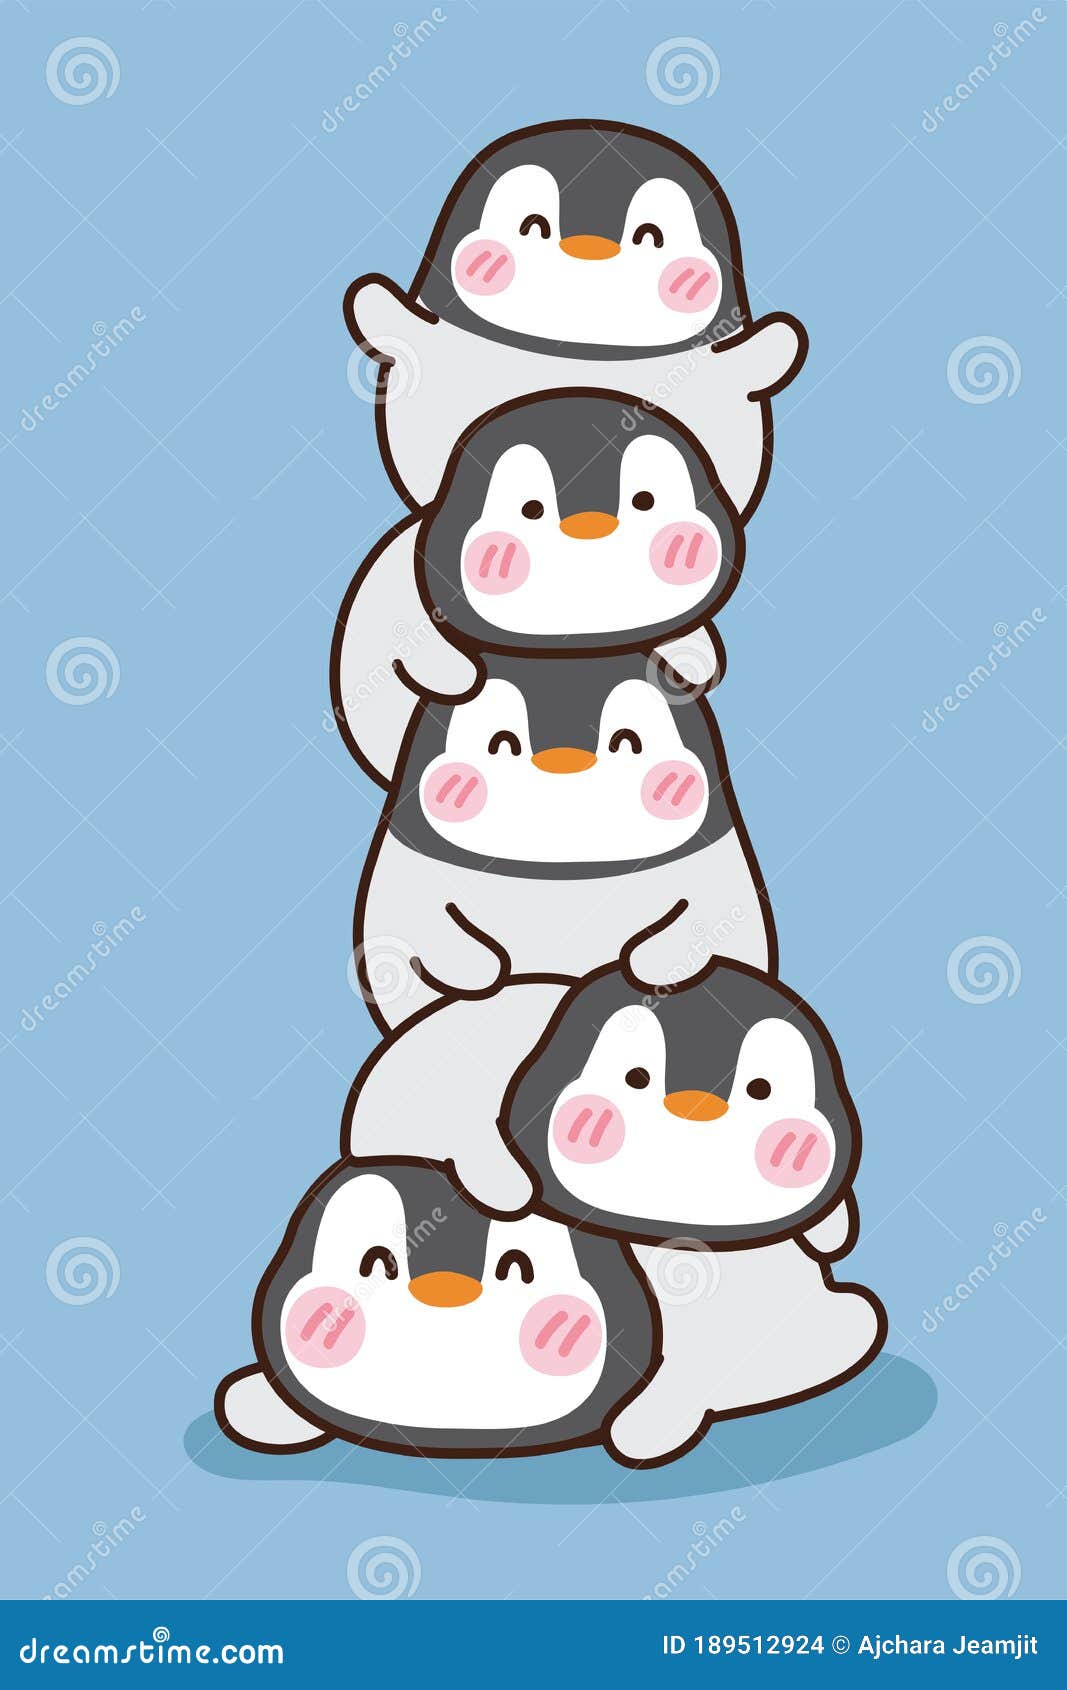 Penguin Backgrounds HD  PixelsTalkNet